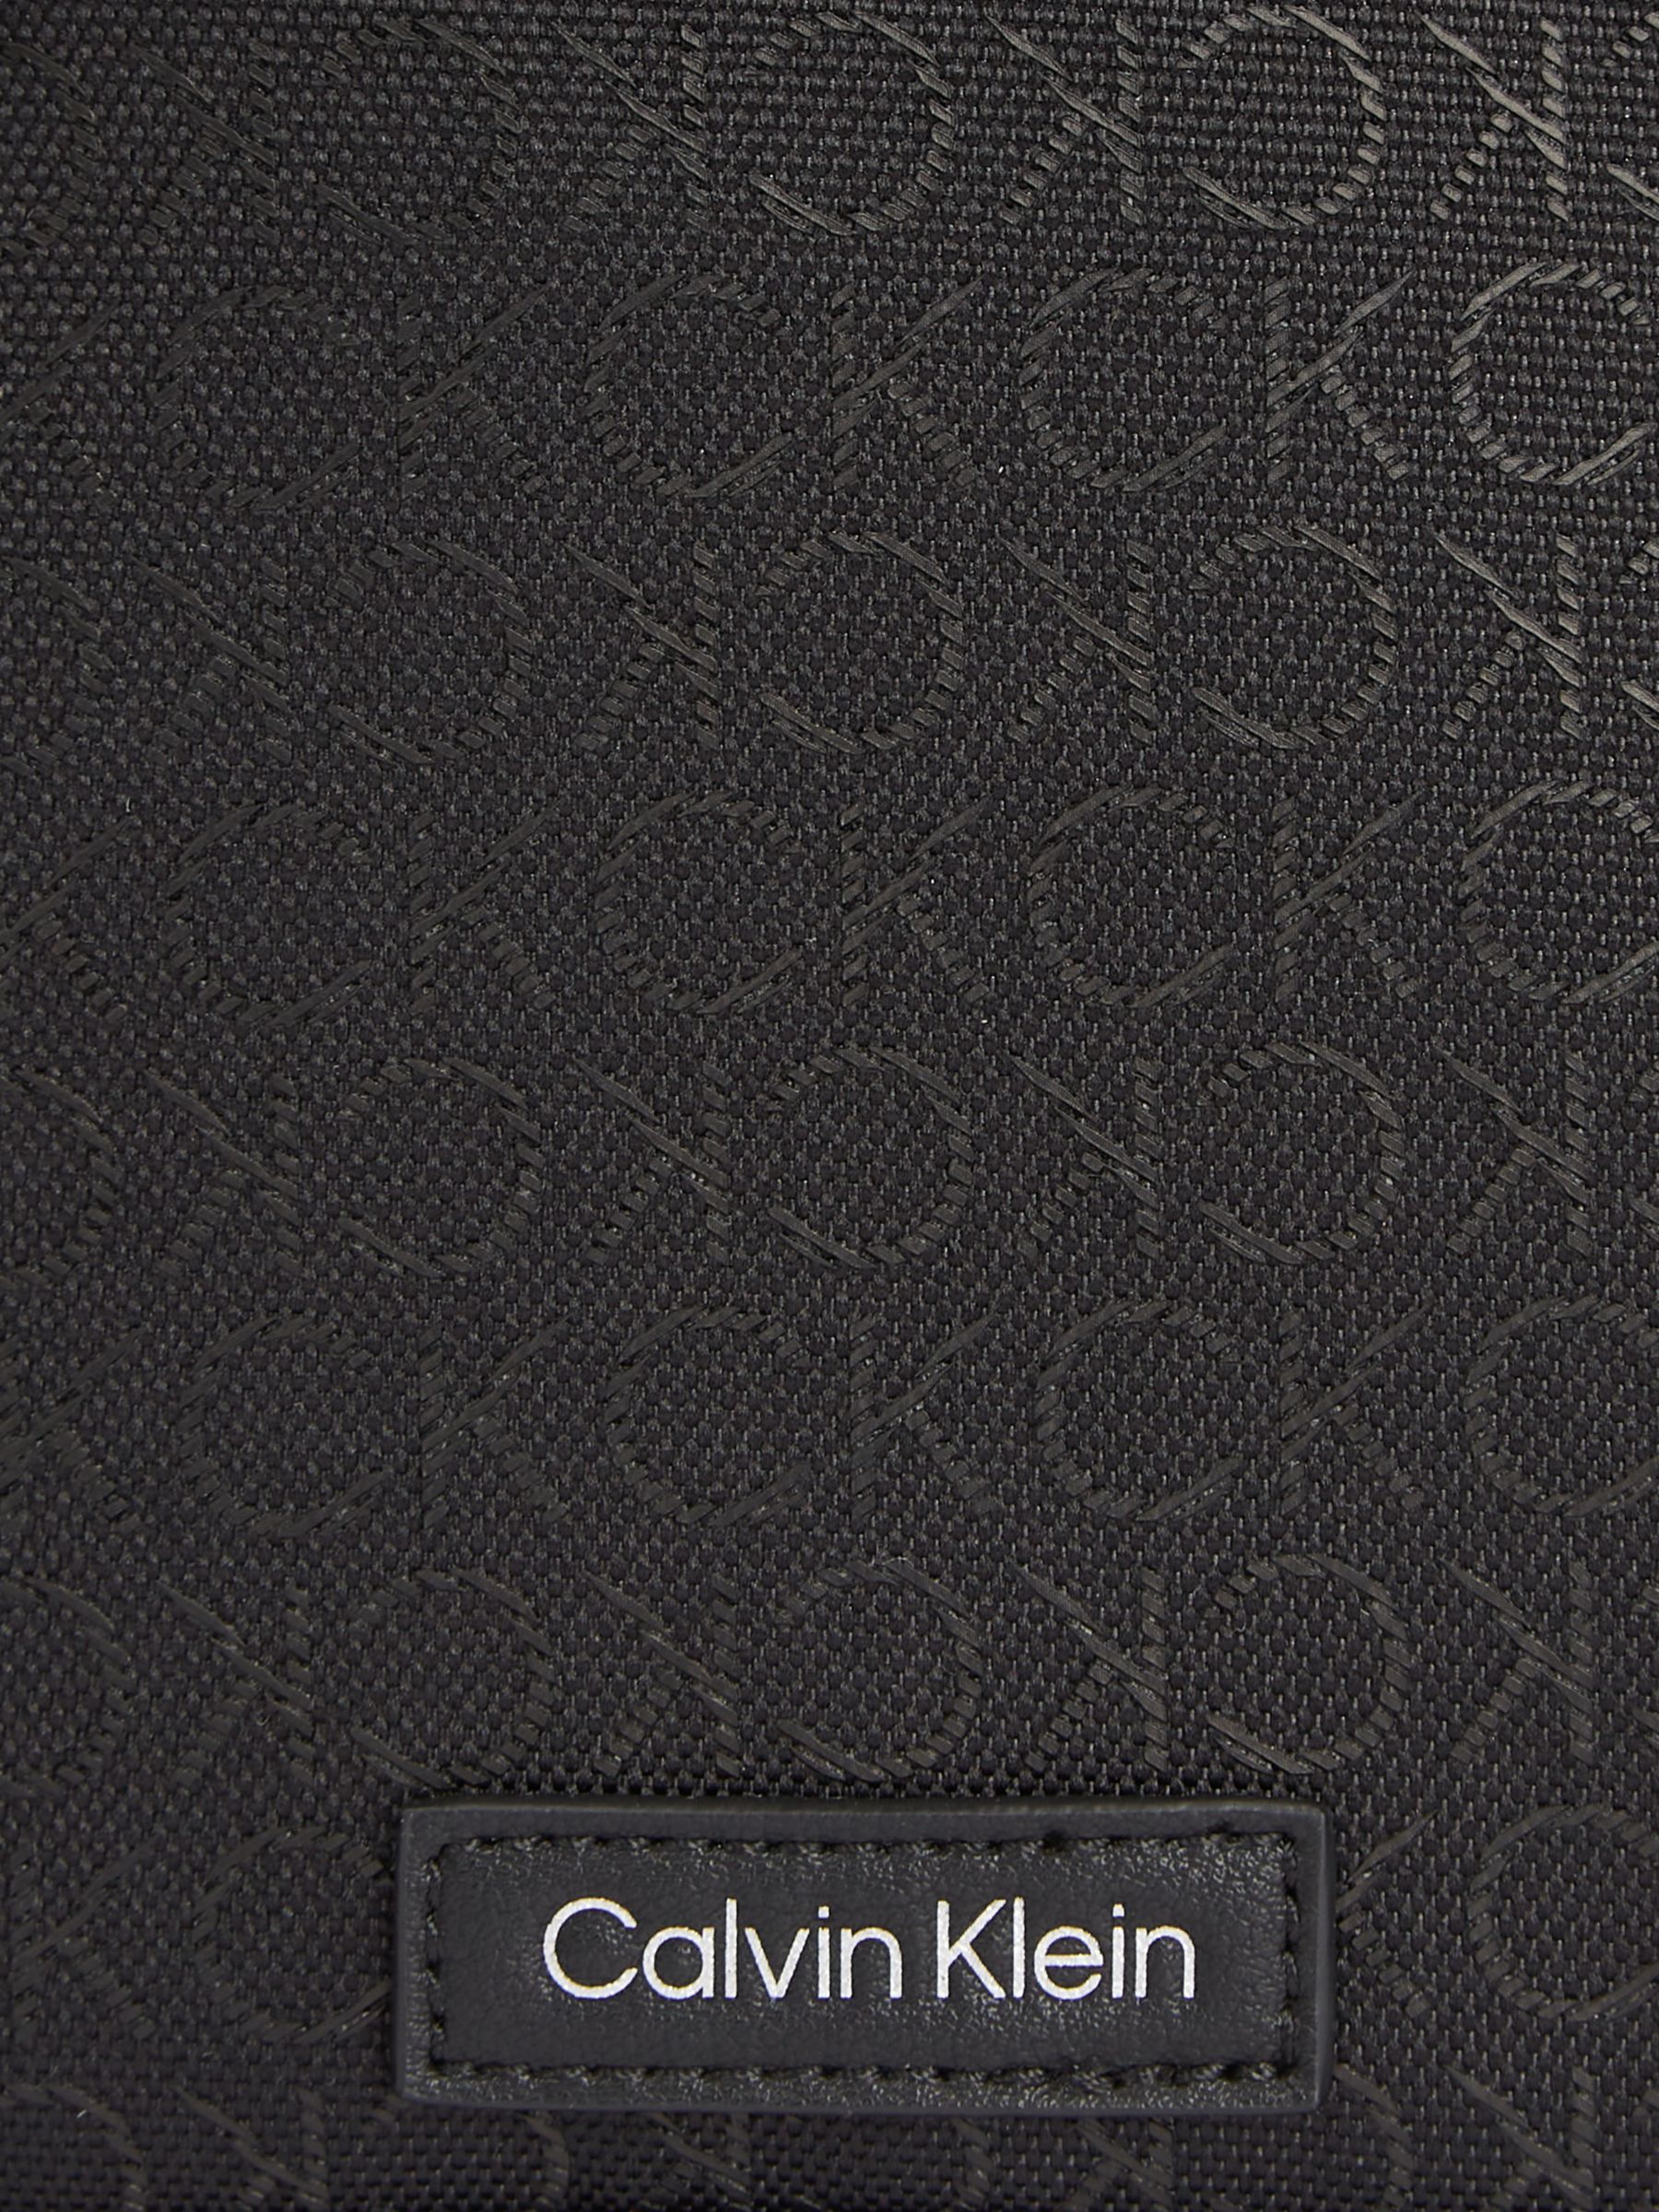 Calvin Klein Messenger Monogram Bag, Black, One Size